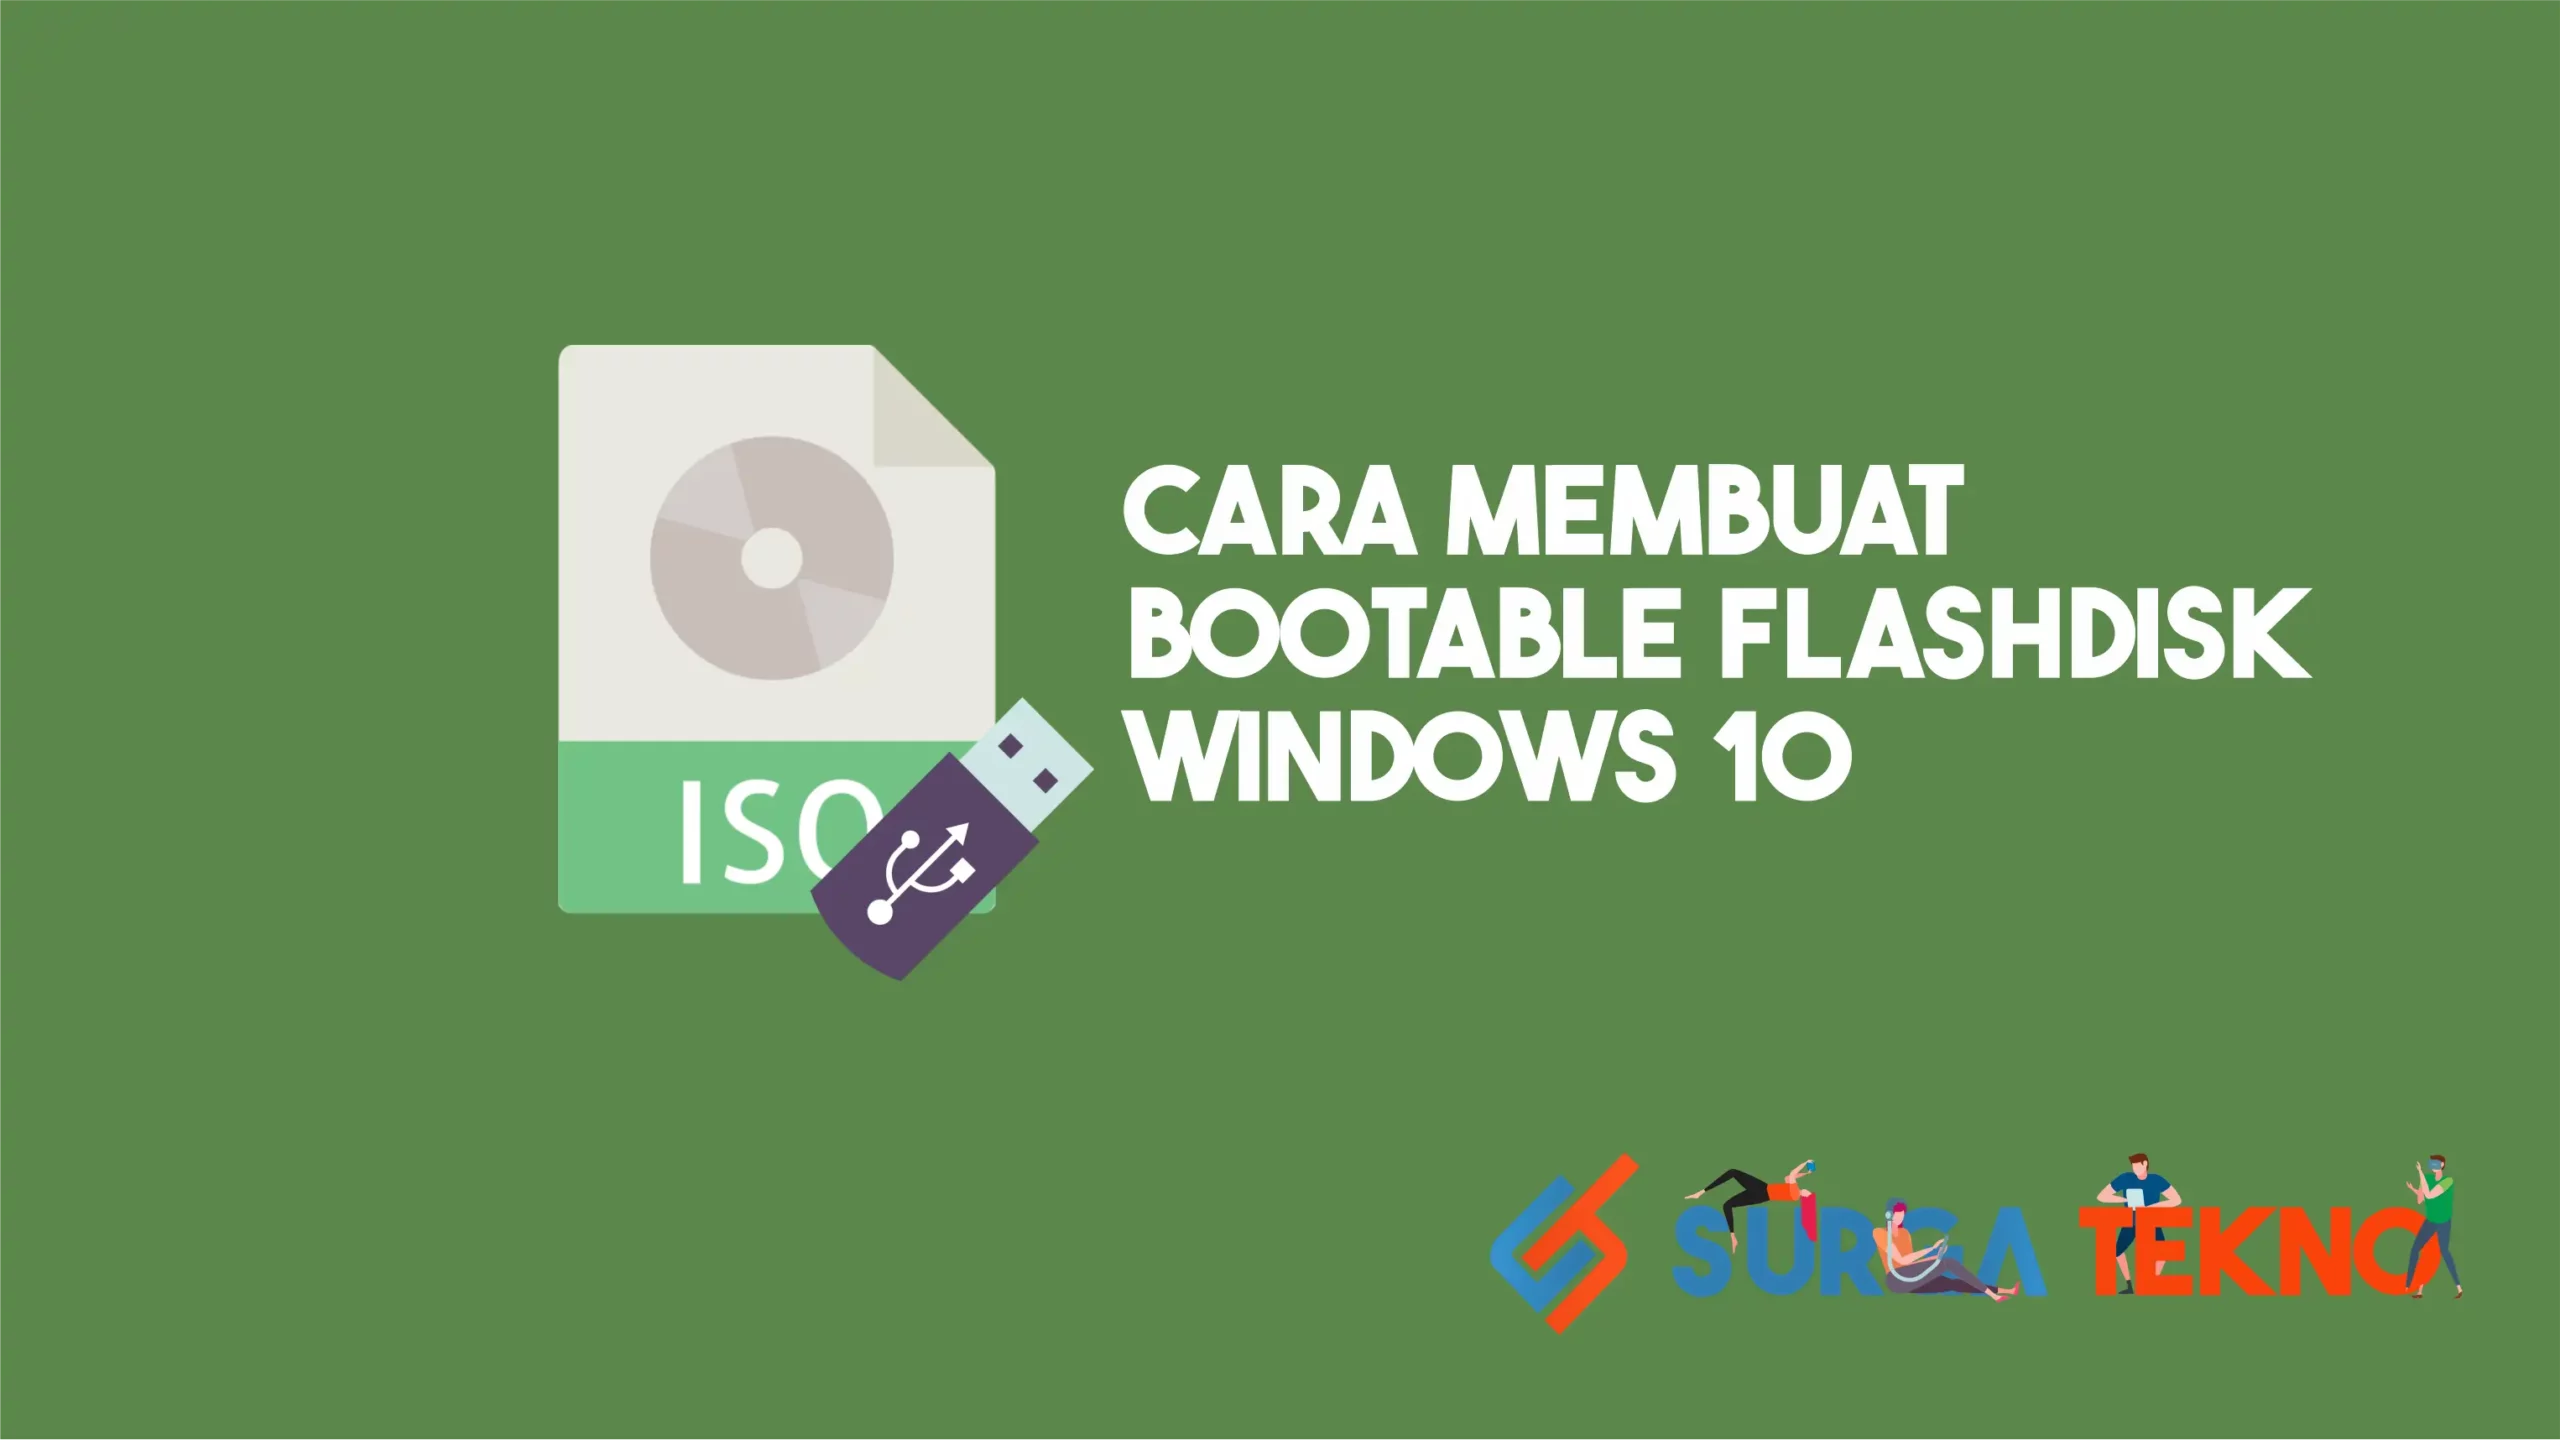 Cara Membuat Bootable Flashdisk Windows 10